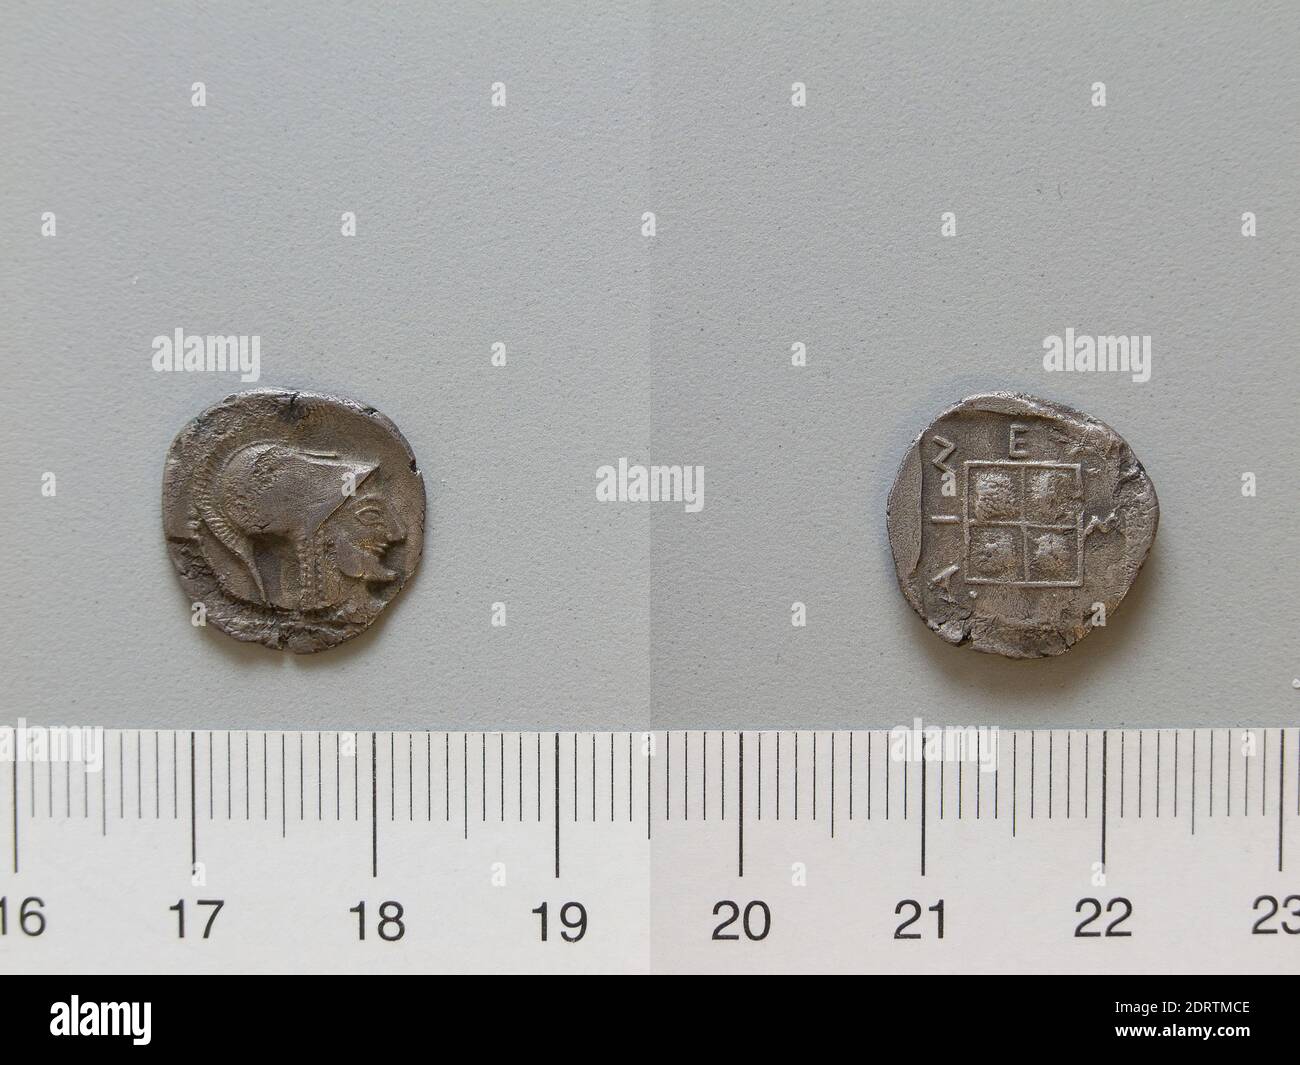 Mint: Aeneia, Coin from Aeneia, 424 B.C., Copper, 2.05 g, 14.8 mm, Made in Aeneia, Macedon, Greek, 5th century, Numismatics Stock Photo